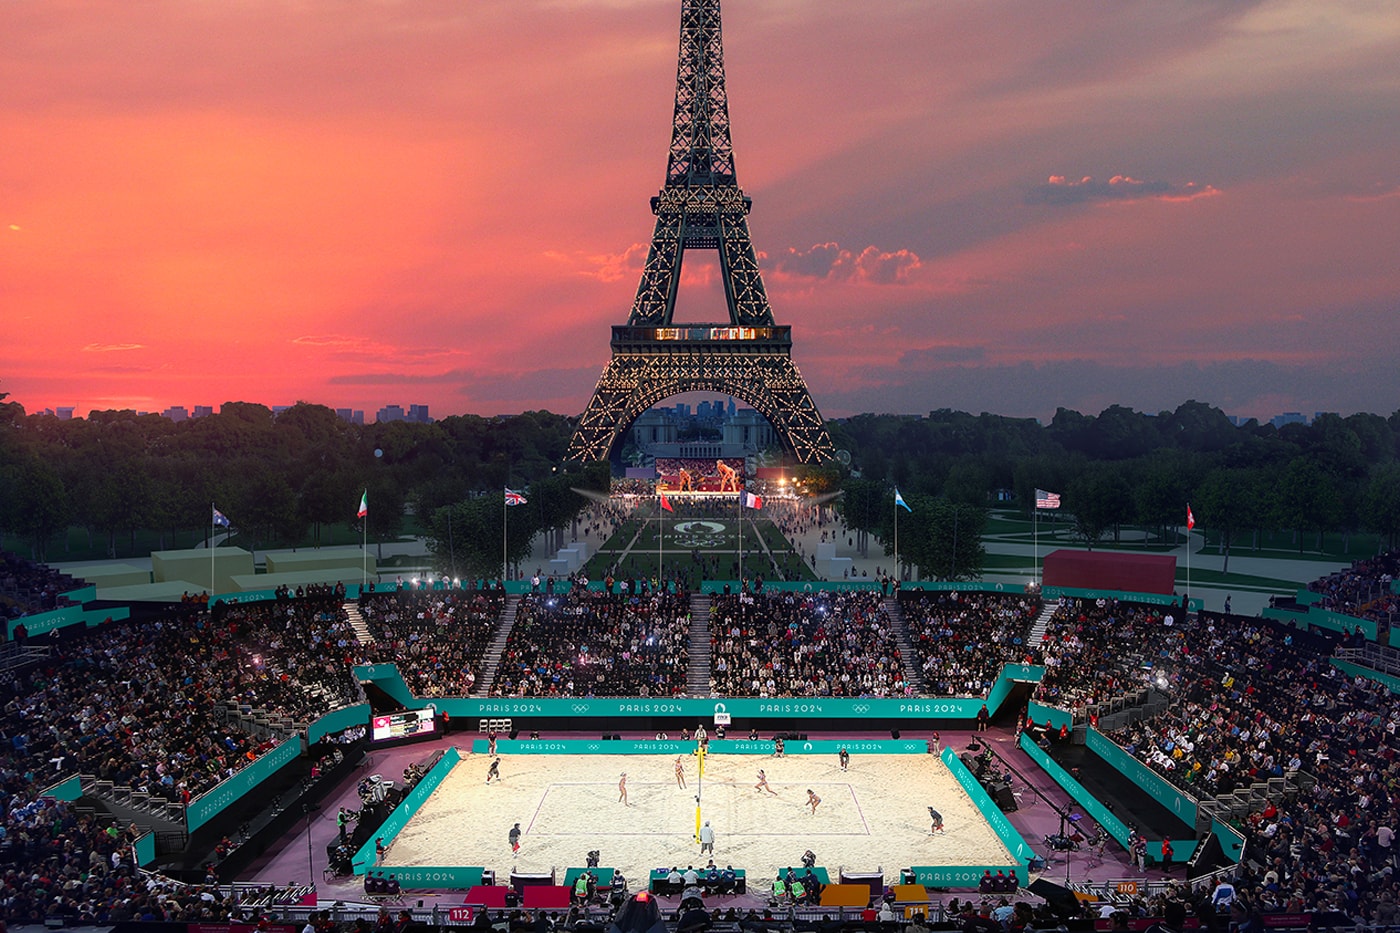 Paris 2024 Olympics Stadium Eiffel Tower